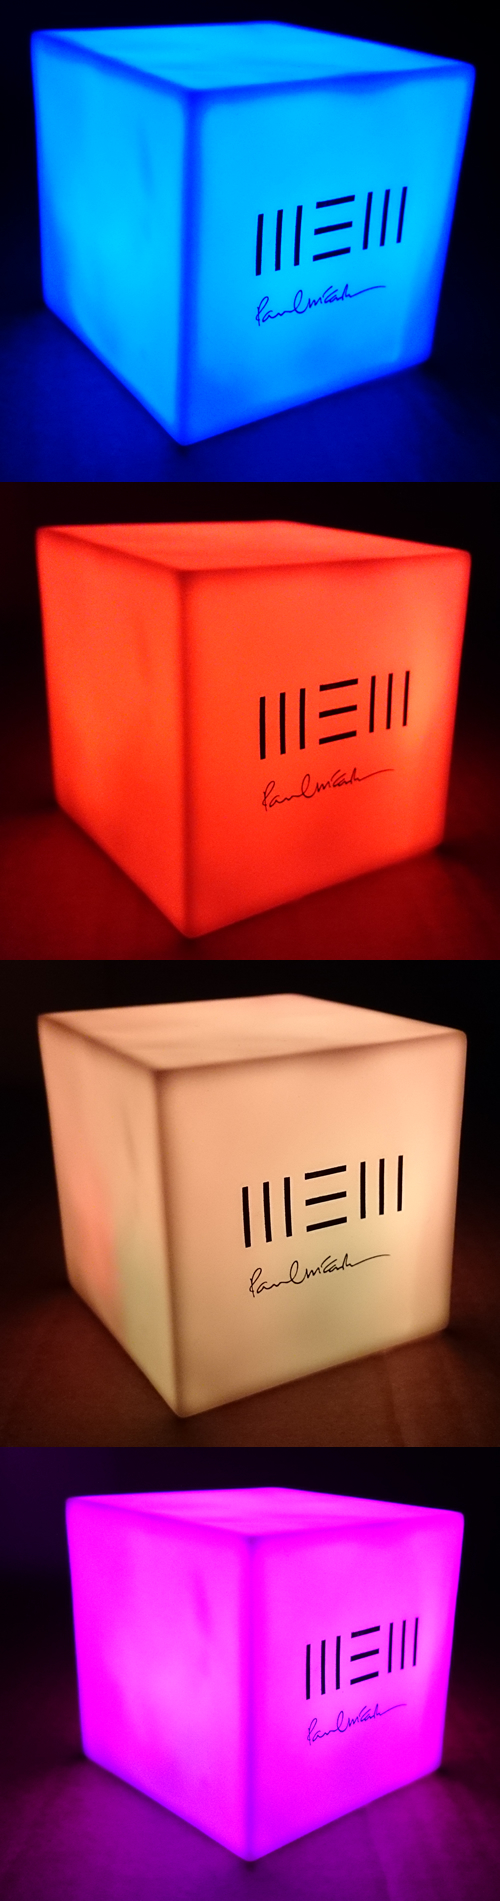 McCartney New Cube  2